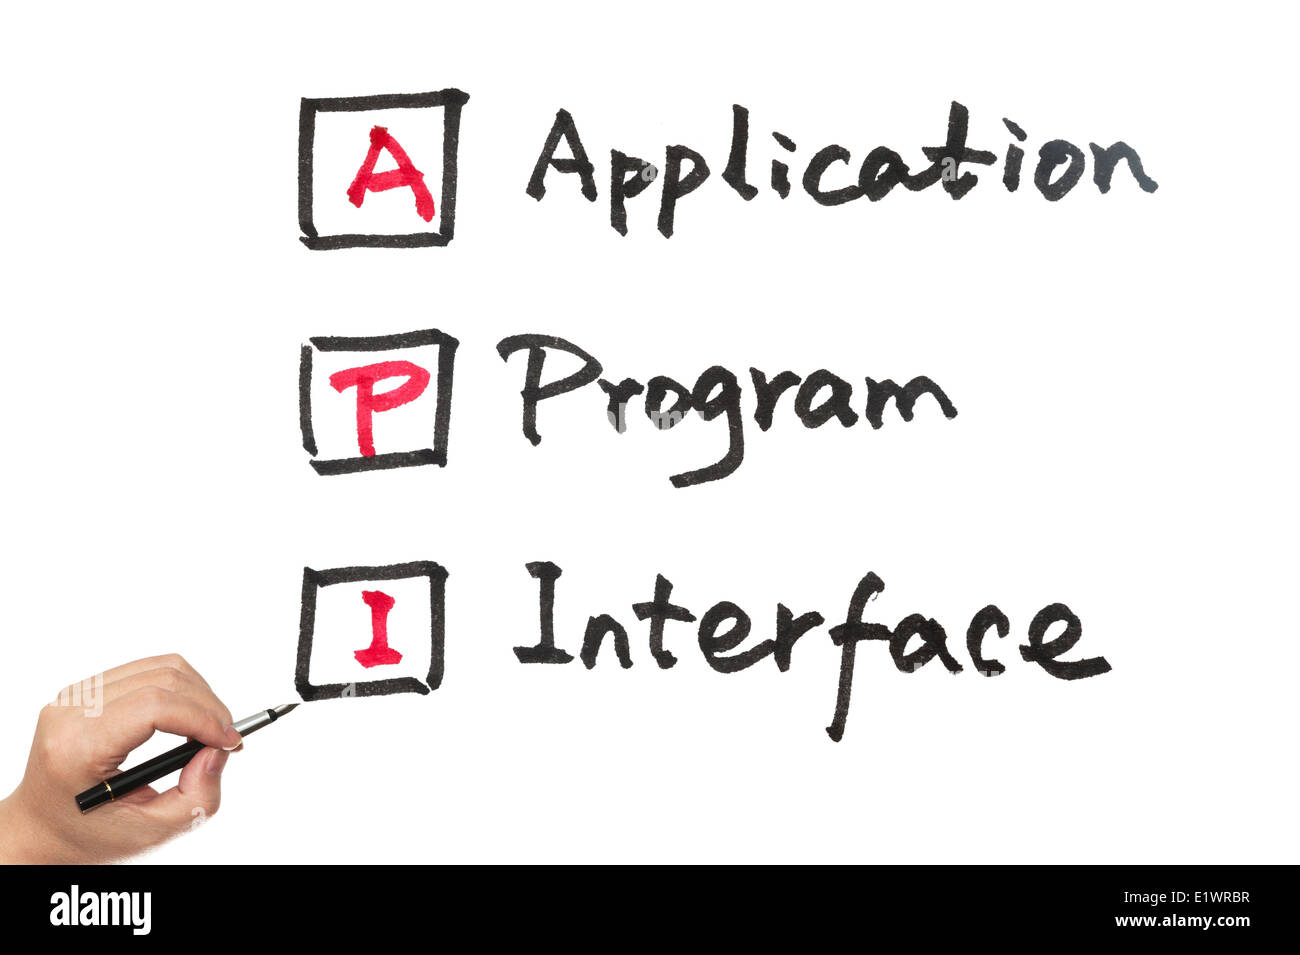 API - Application program interface words written on paper Stock Photo